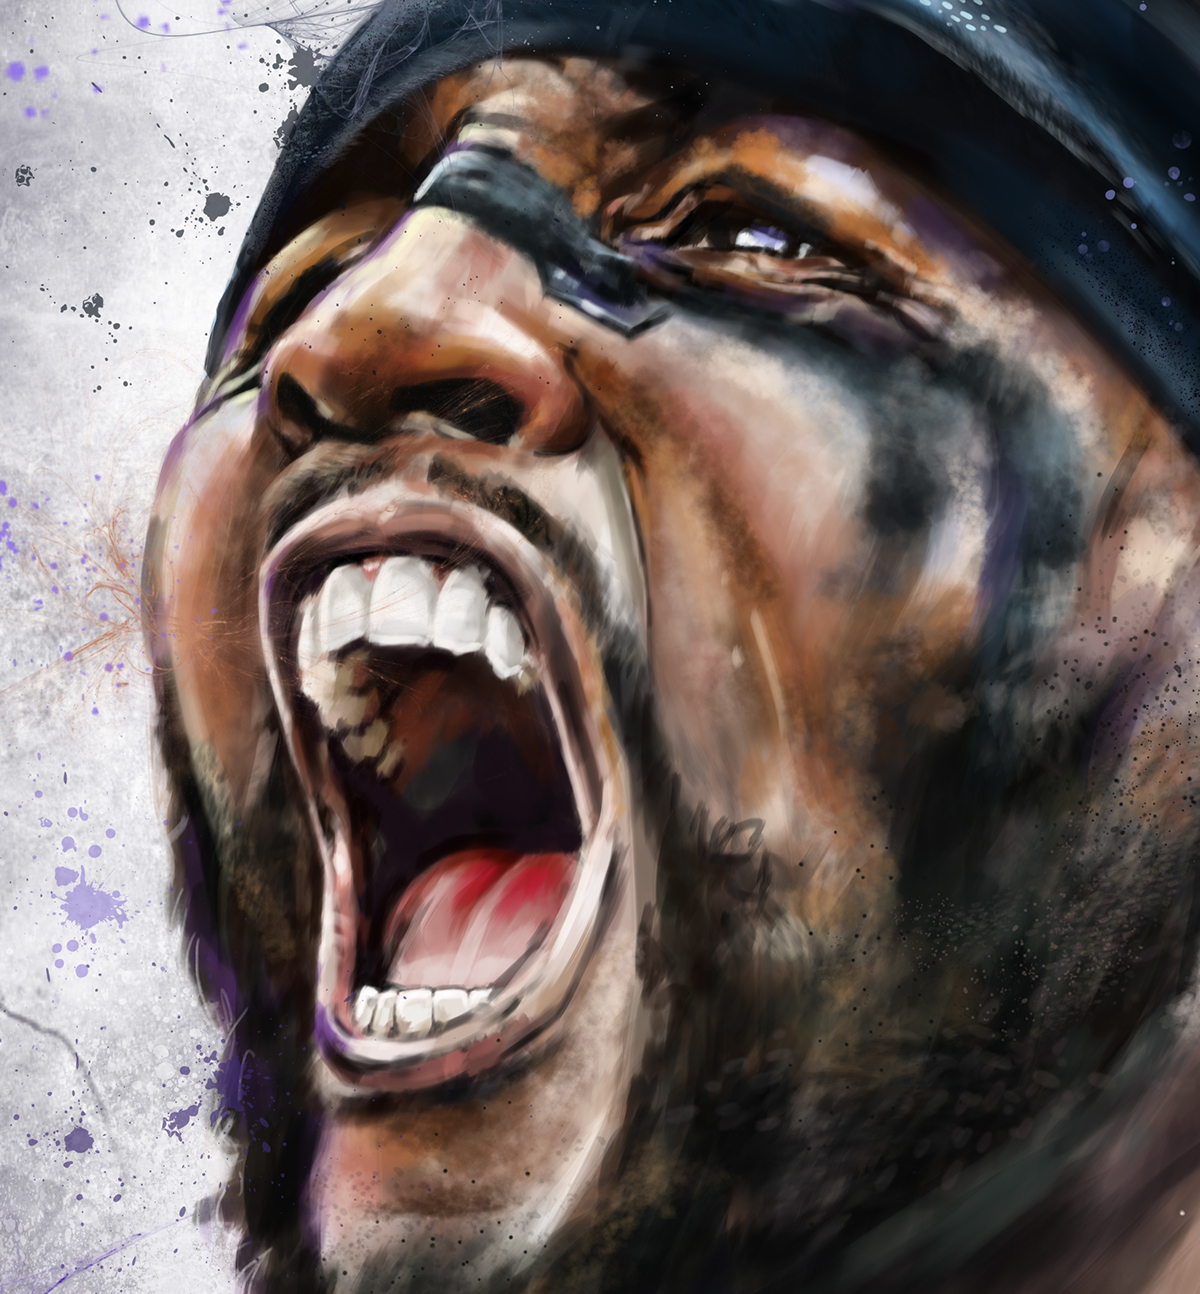 ravens Ray Lewis sports sports illustration football superbowl legend digital painting portrait